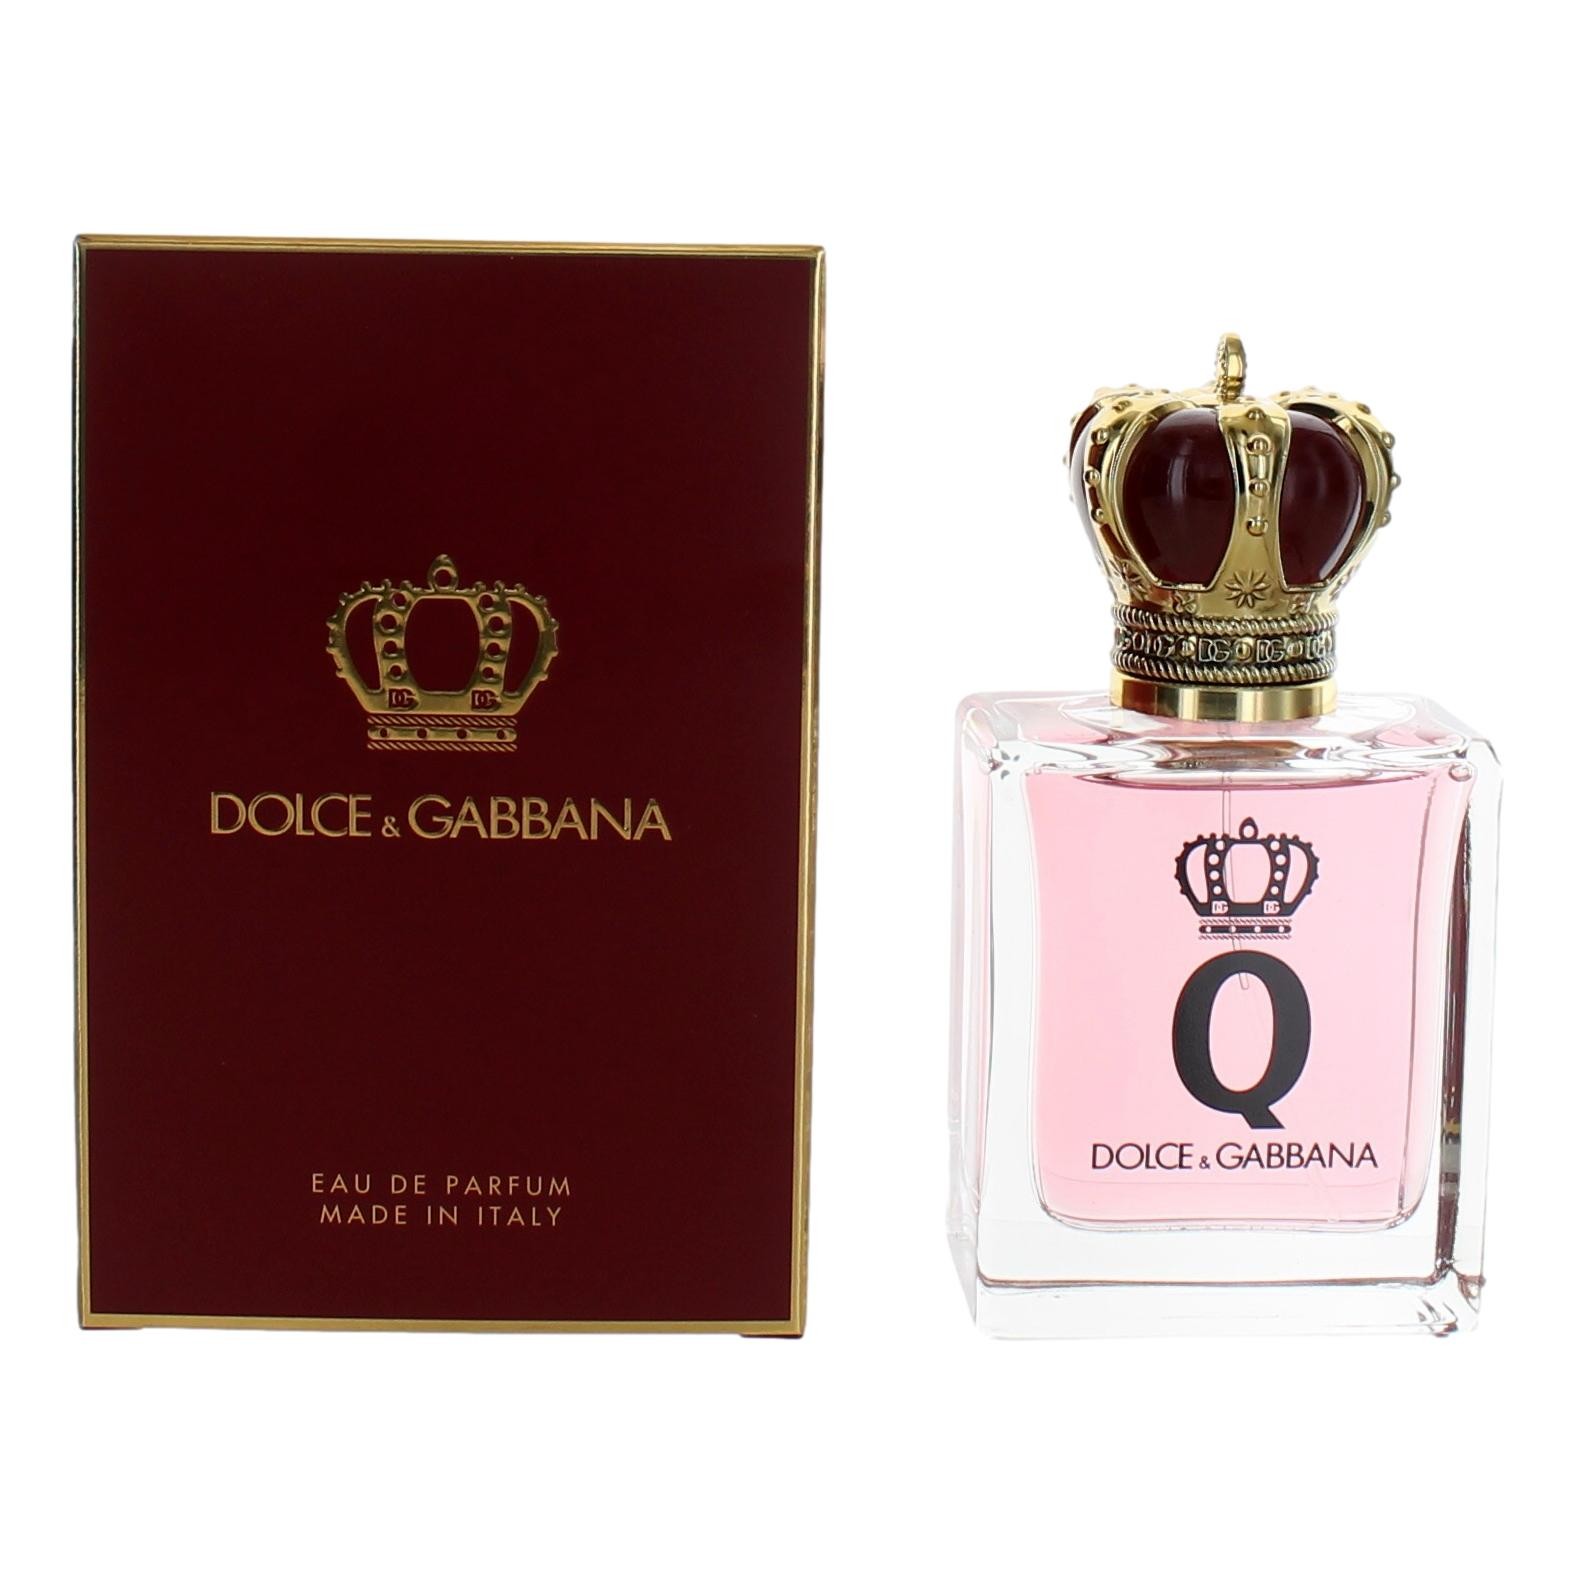 Q by Dolce & Gabbana 1.7 oz Eau de Parfum Spray for Women